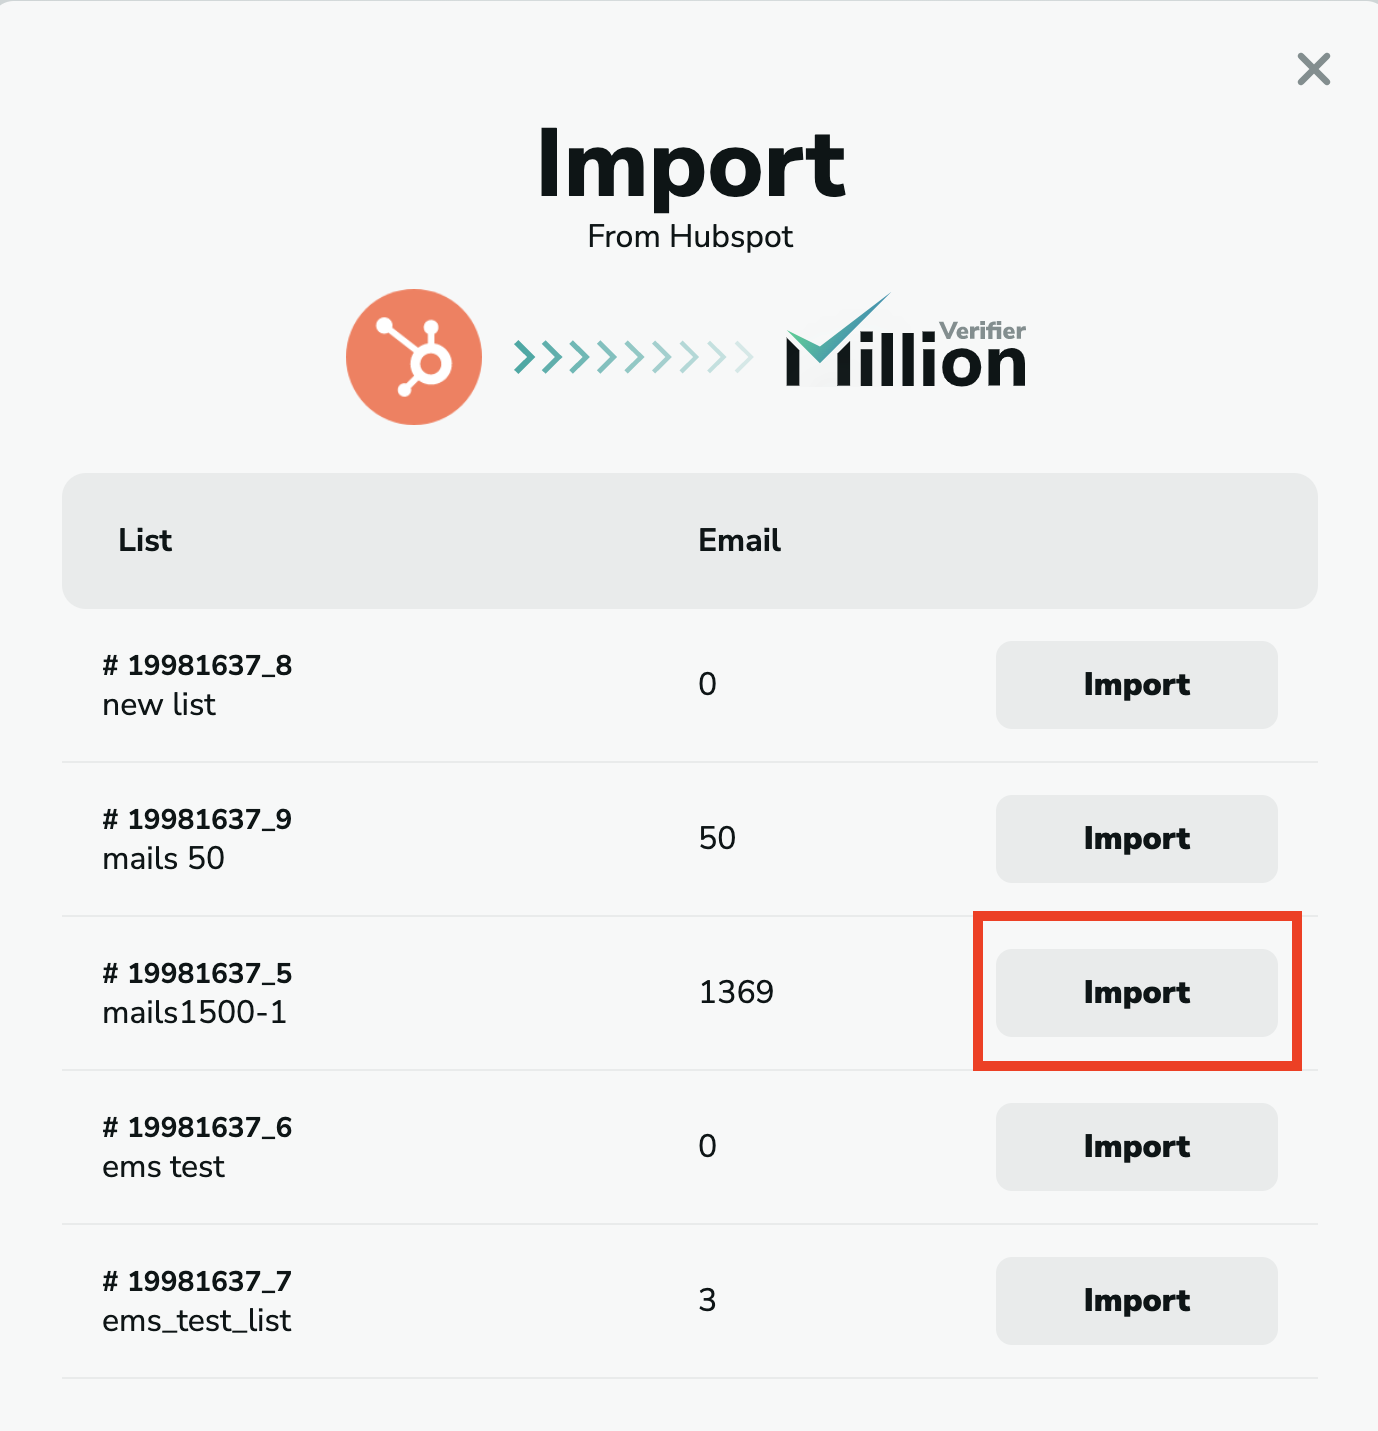 Hubspot import emails in MillionVerifier